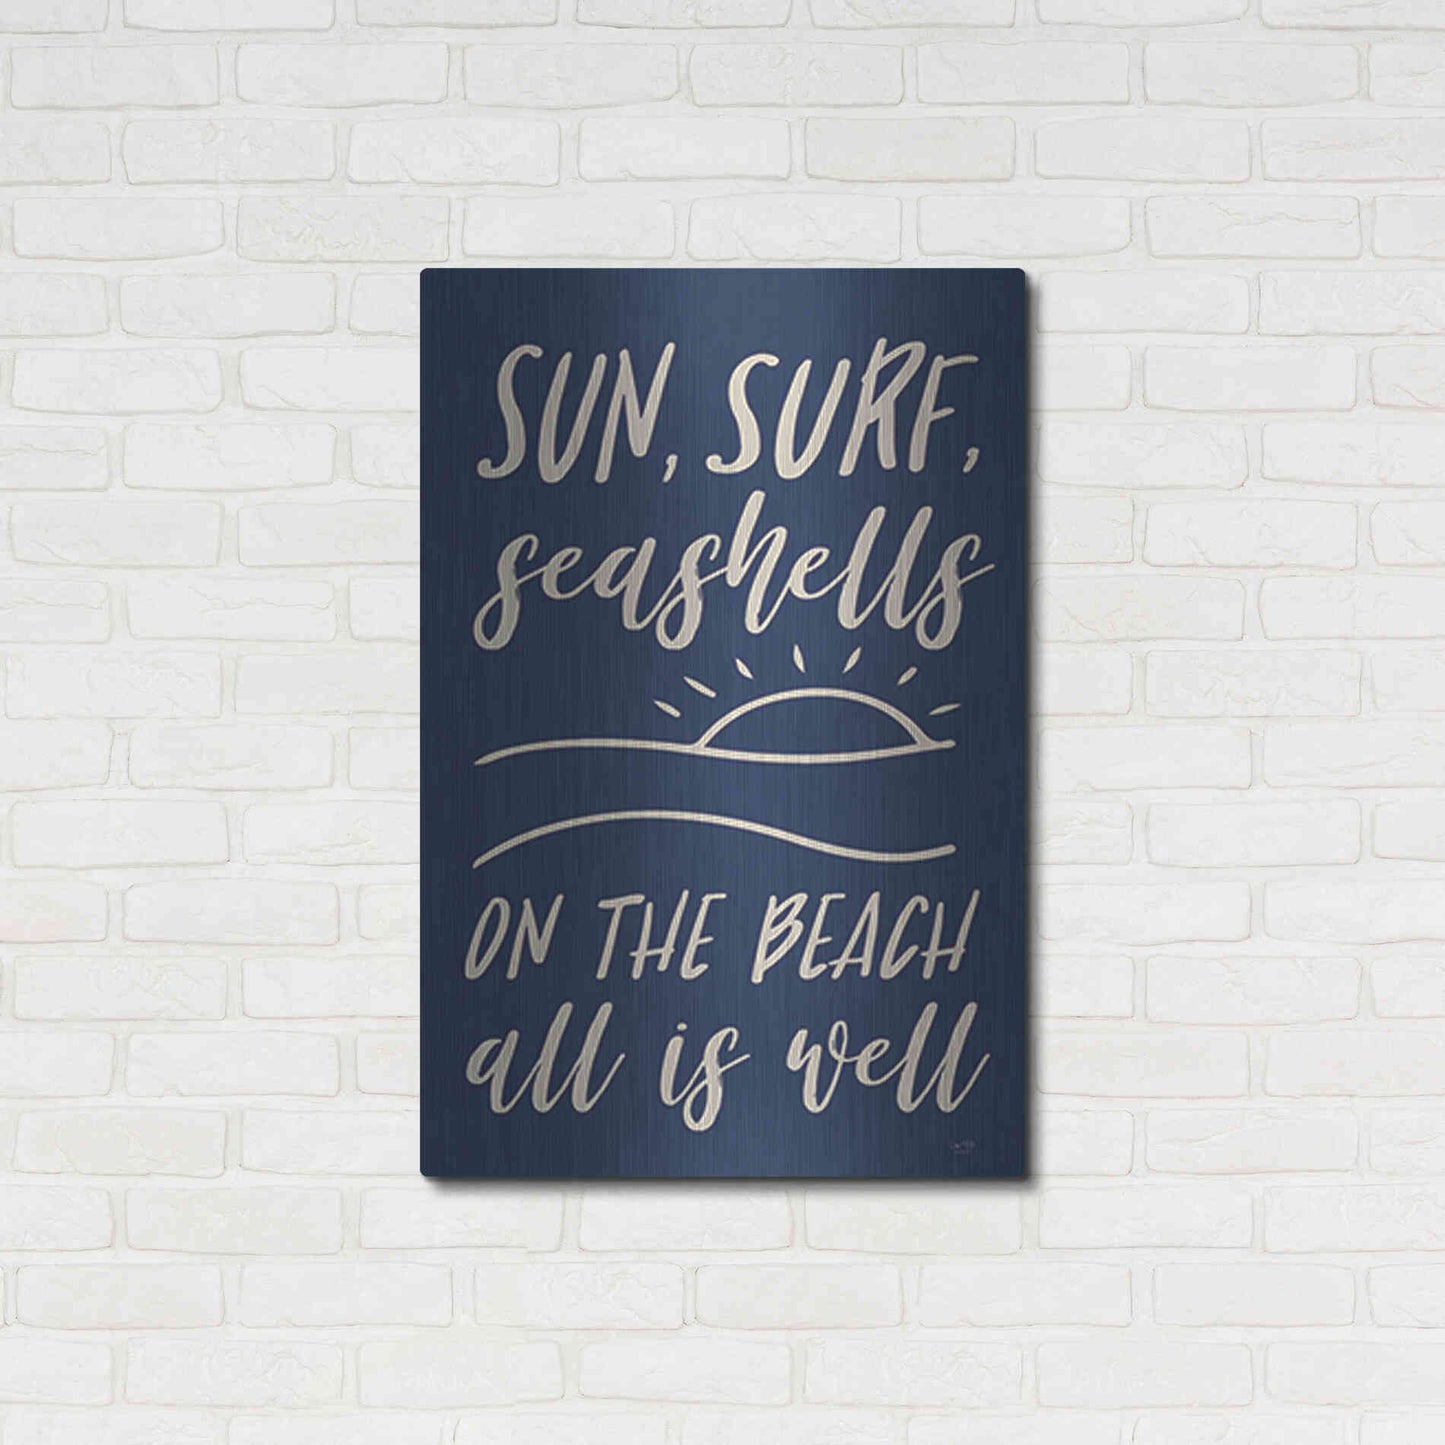 Luxe Metal Art 'Sun, Surf, Seashells' by Lux + Me Designs, Metal Wall Art,24x36